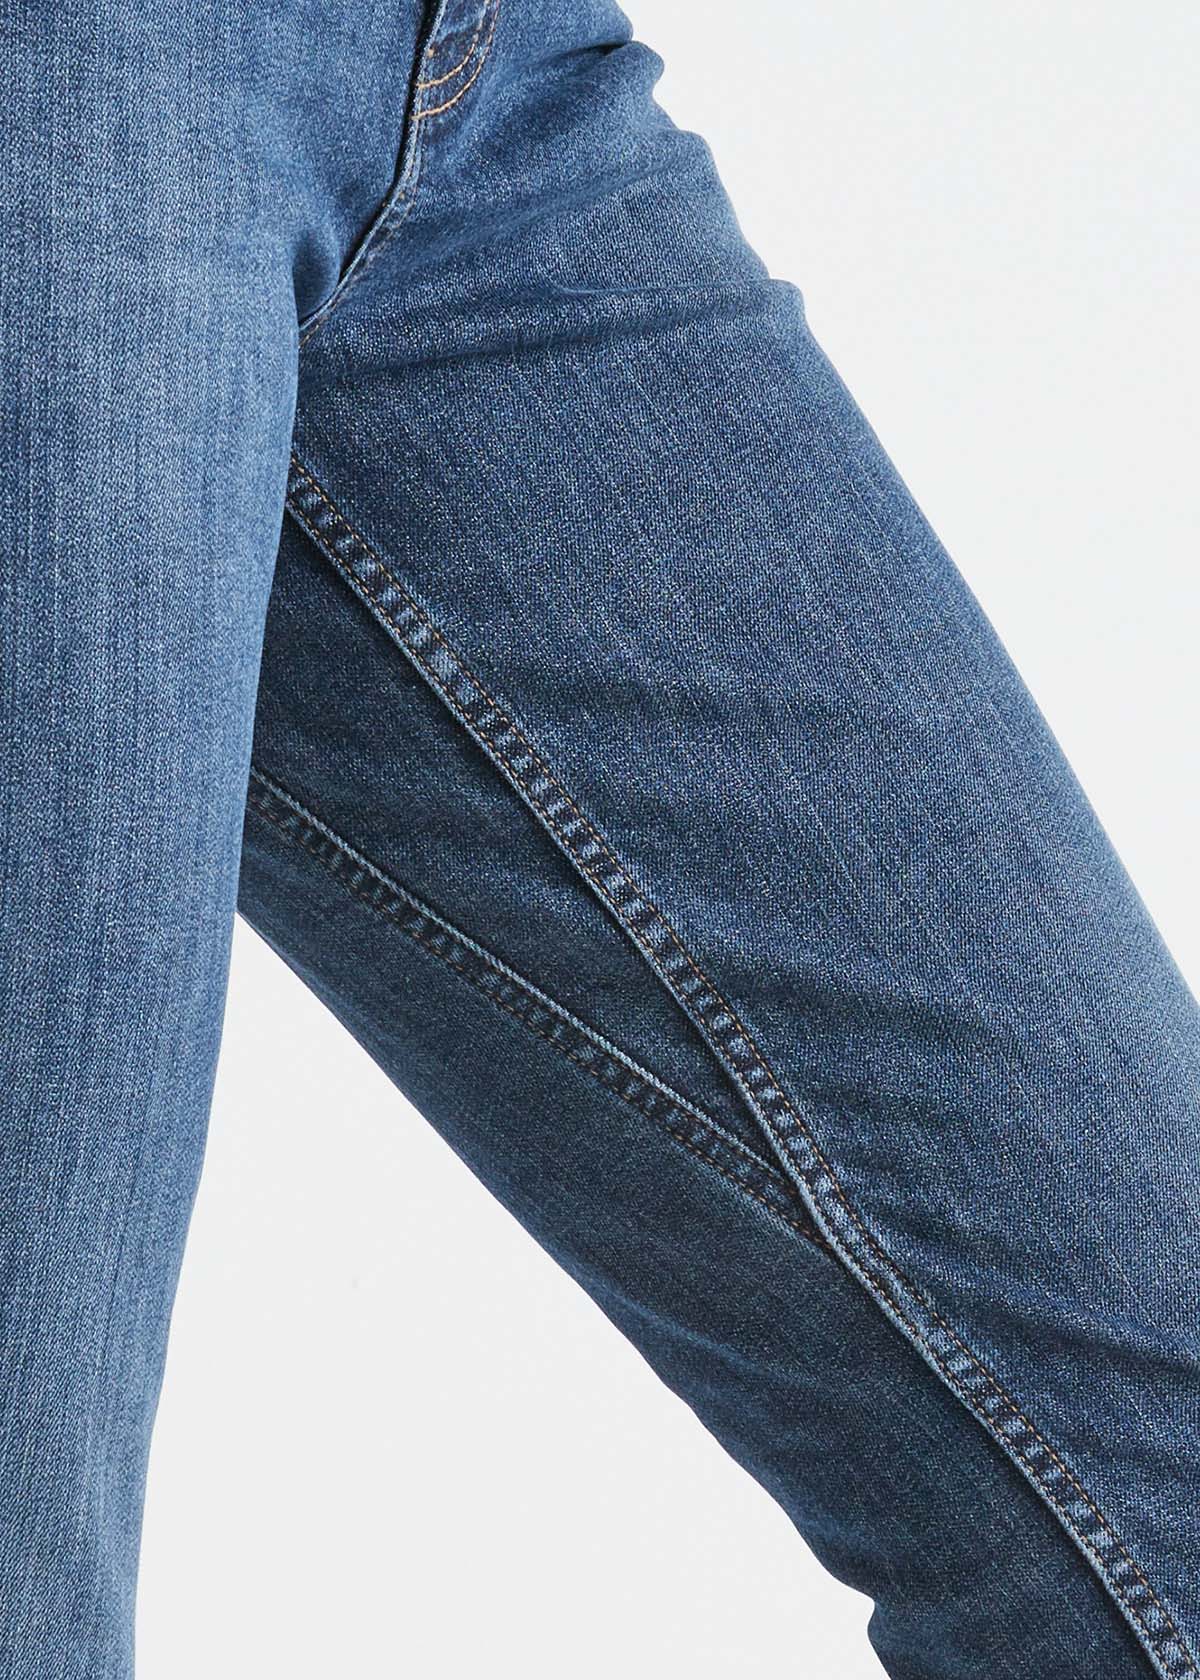 LL Bean Denim Fleece Lined Jeans Men's Size 42X32 Relaxed Fit Tapered Leg  Blue | eBay